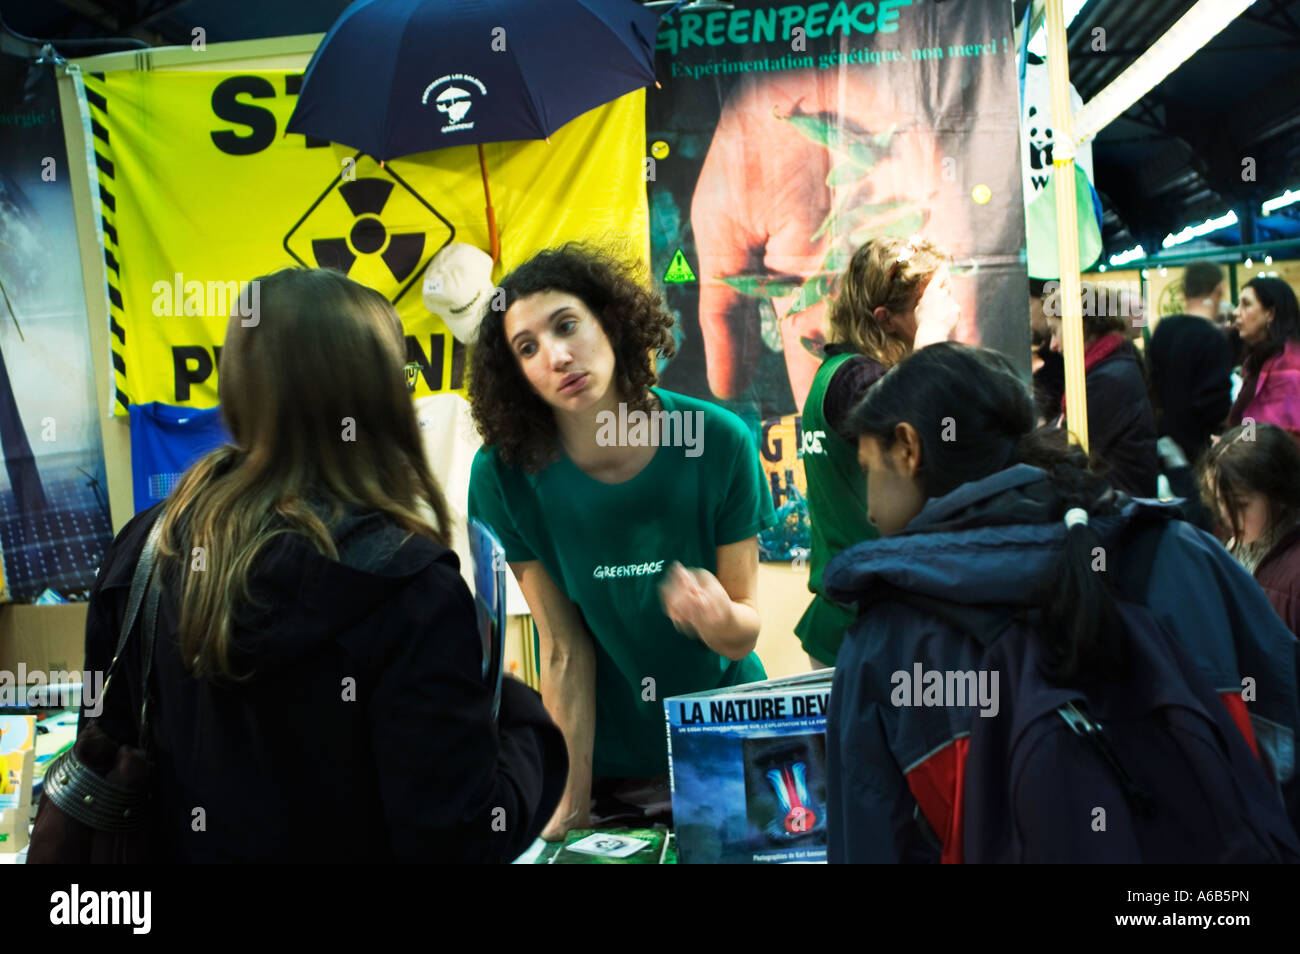 Paris France, Greenpeace Exhibit at the Paris Organic 'Trade Show' Two Women Talking Ethical Spending, Fund raising non-profit, volunteer NGO work Stock Photo